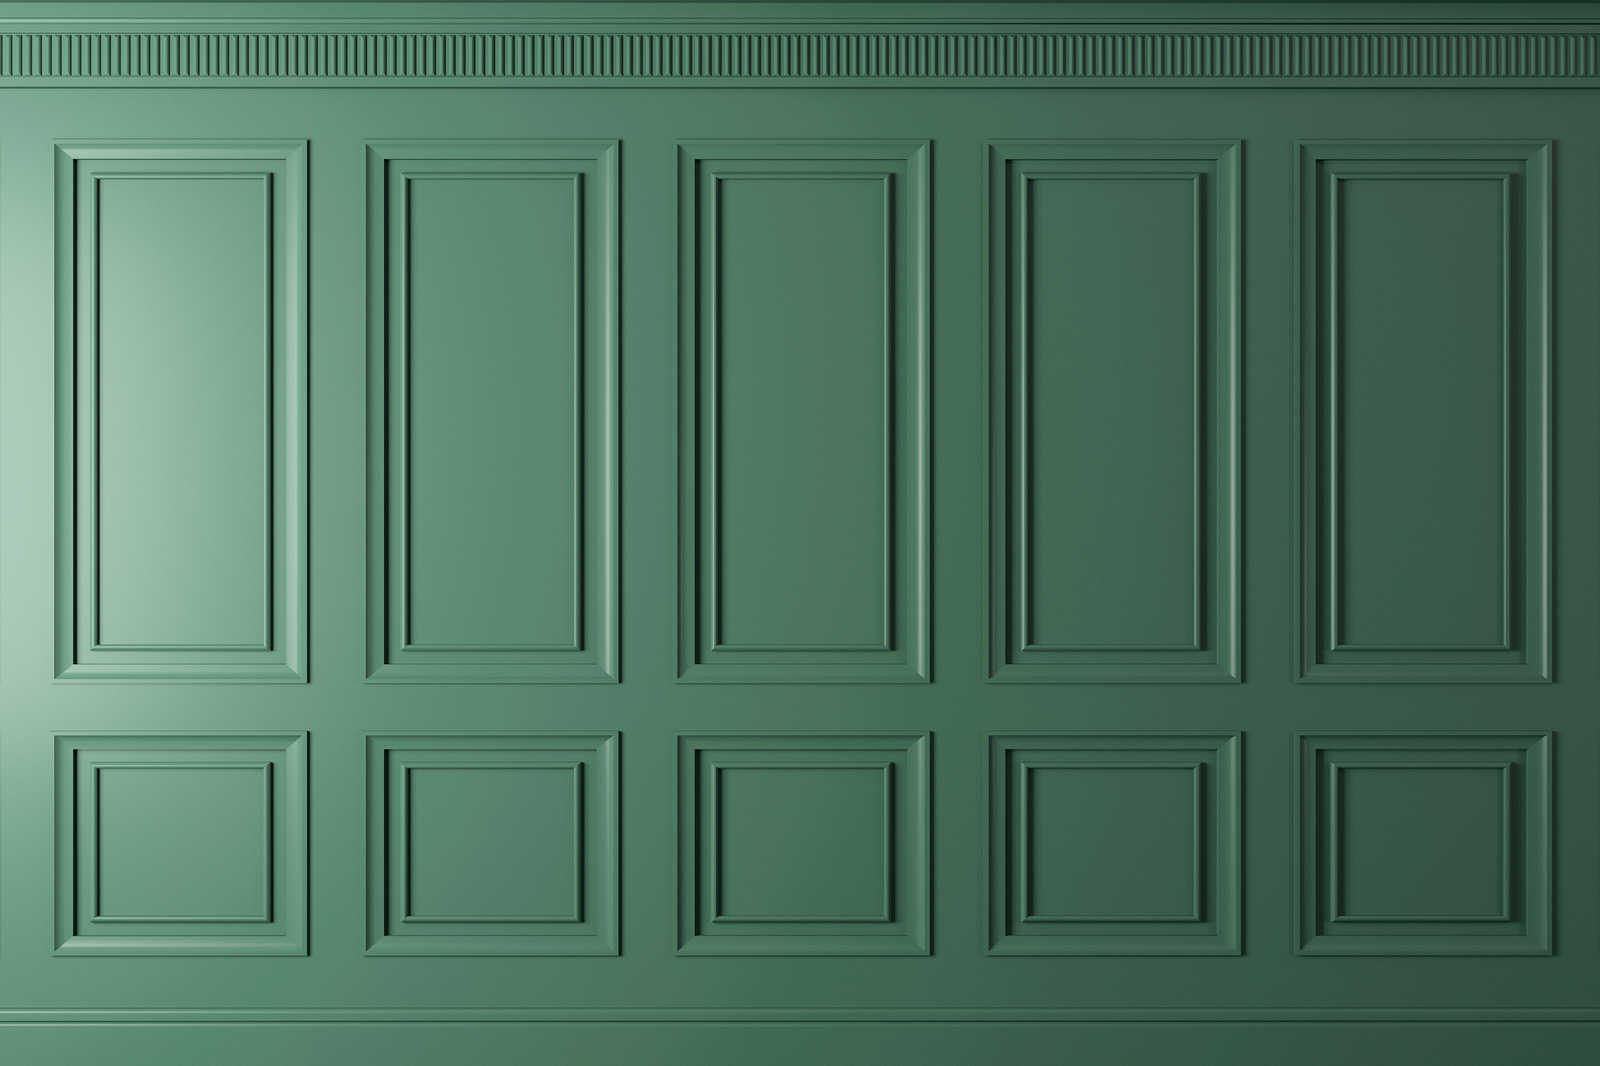             Kensington 1 - Quadro 3D in legno di abete verde - 1,20 m x 0,80 m
        